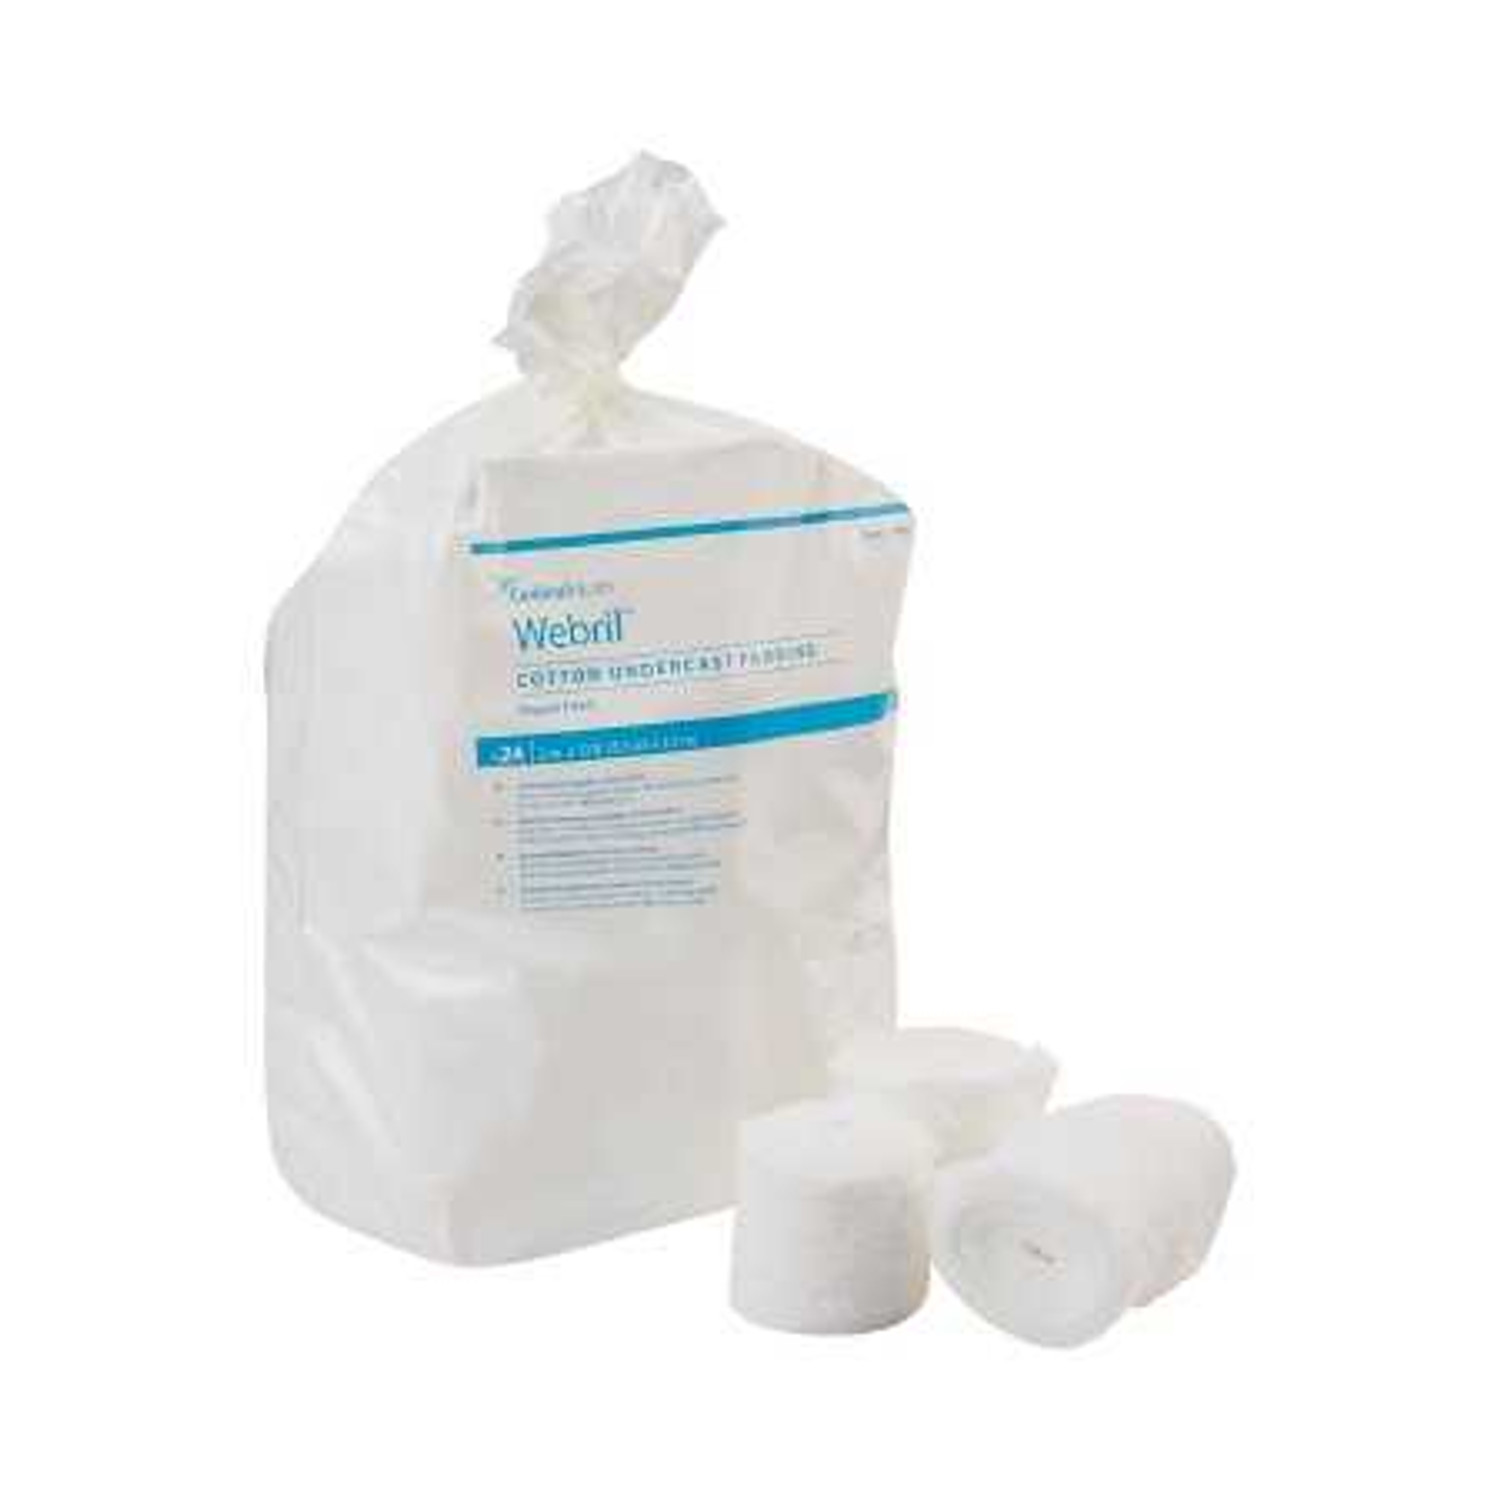 Webril™ White Cotton Undercast Cast Padding, 4 Inch x 4 Yard